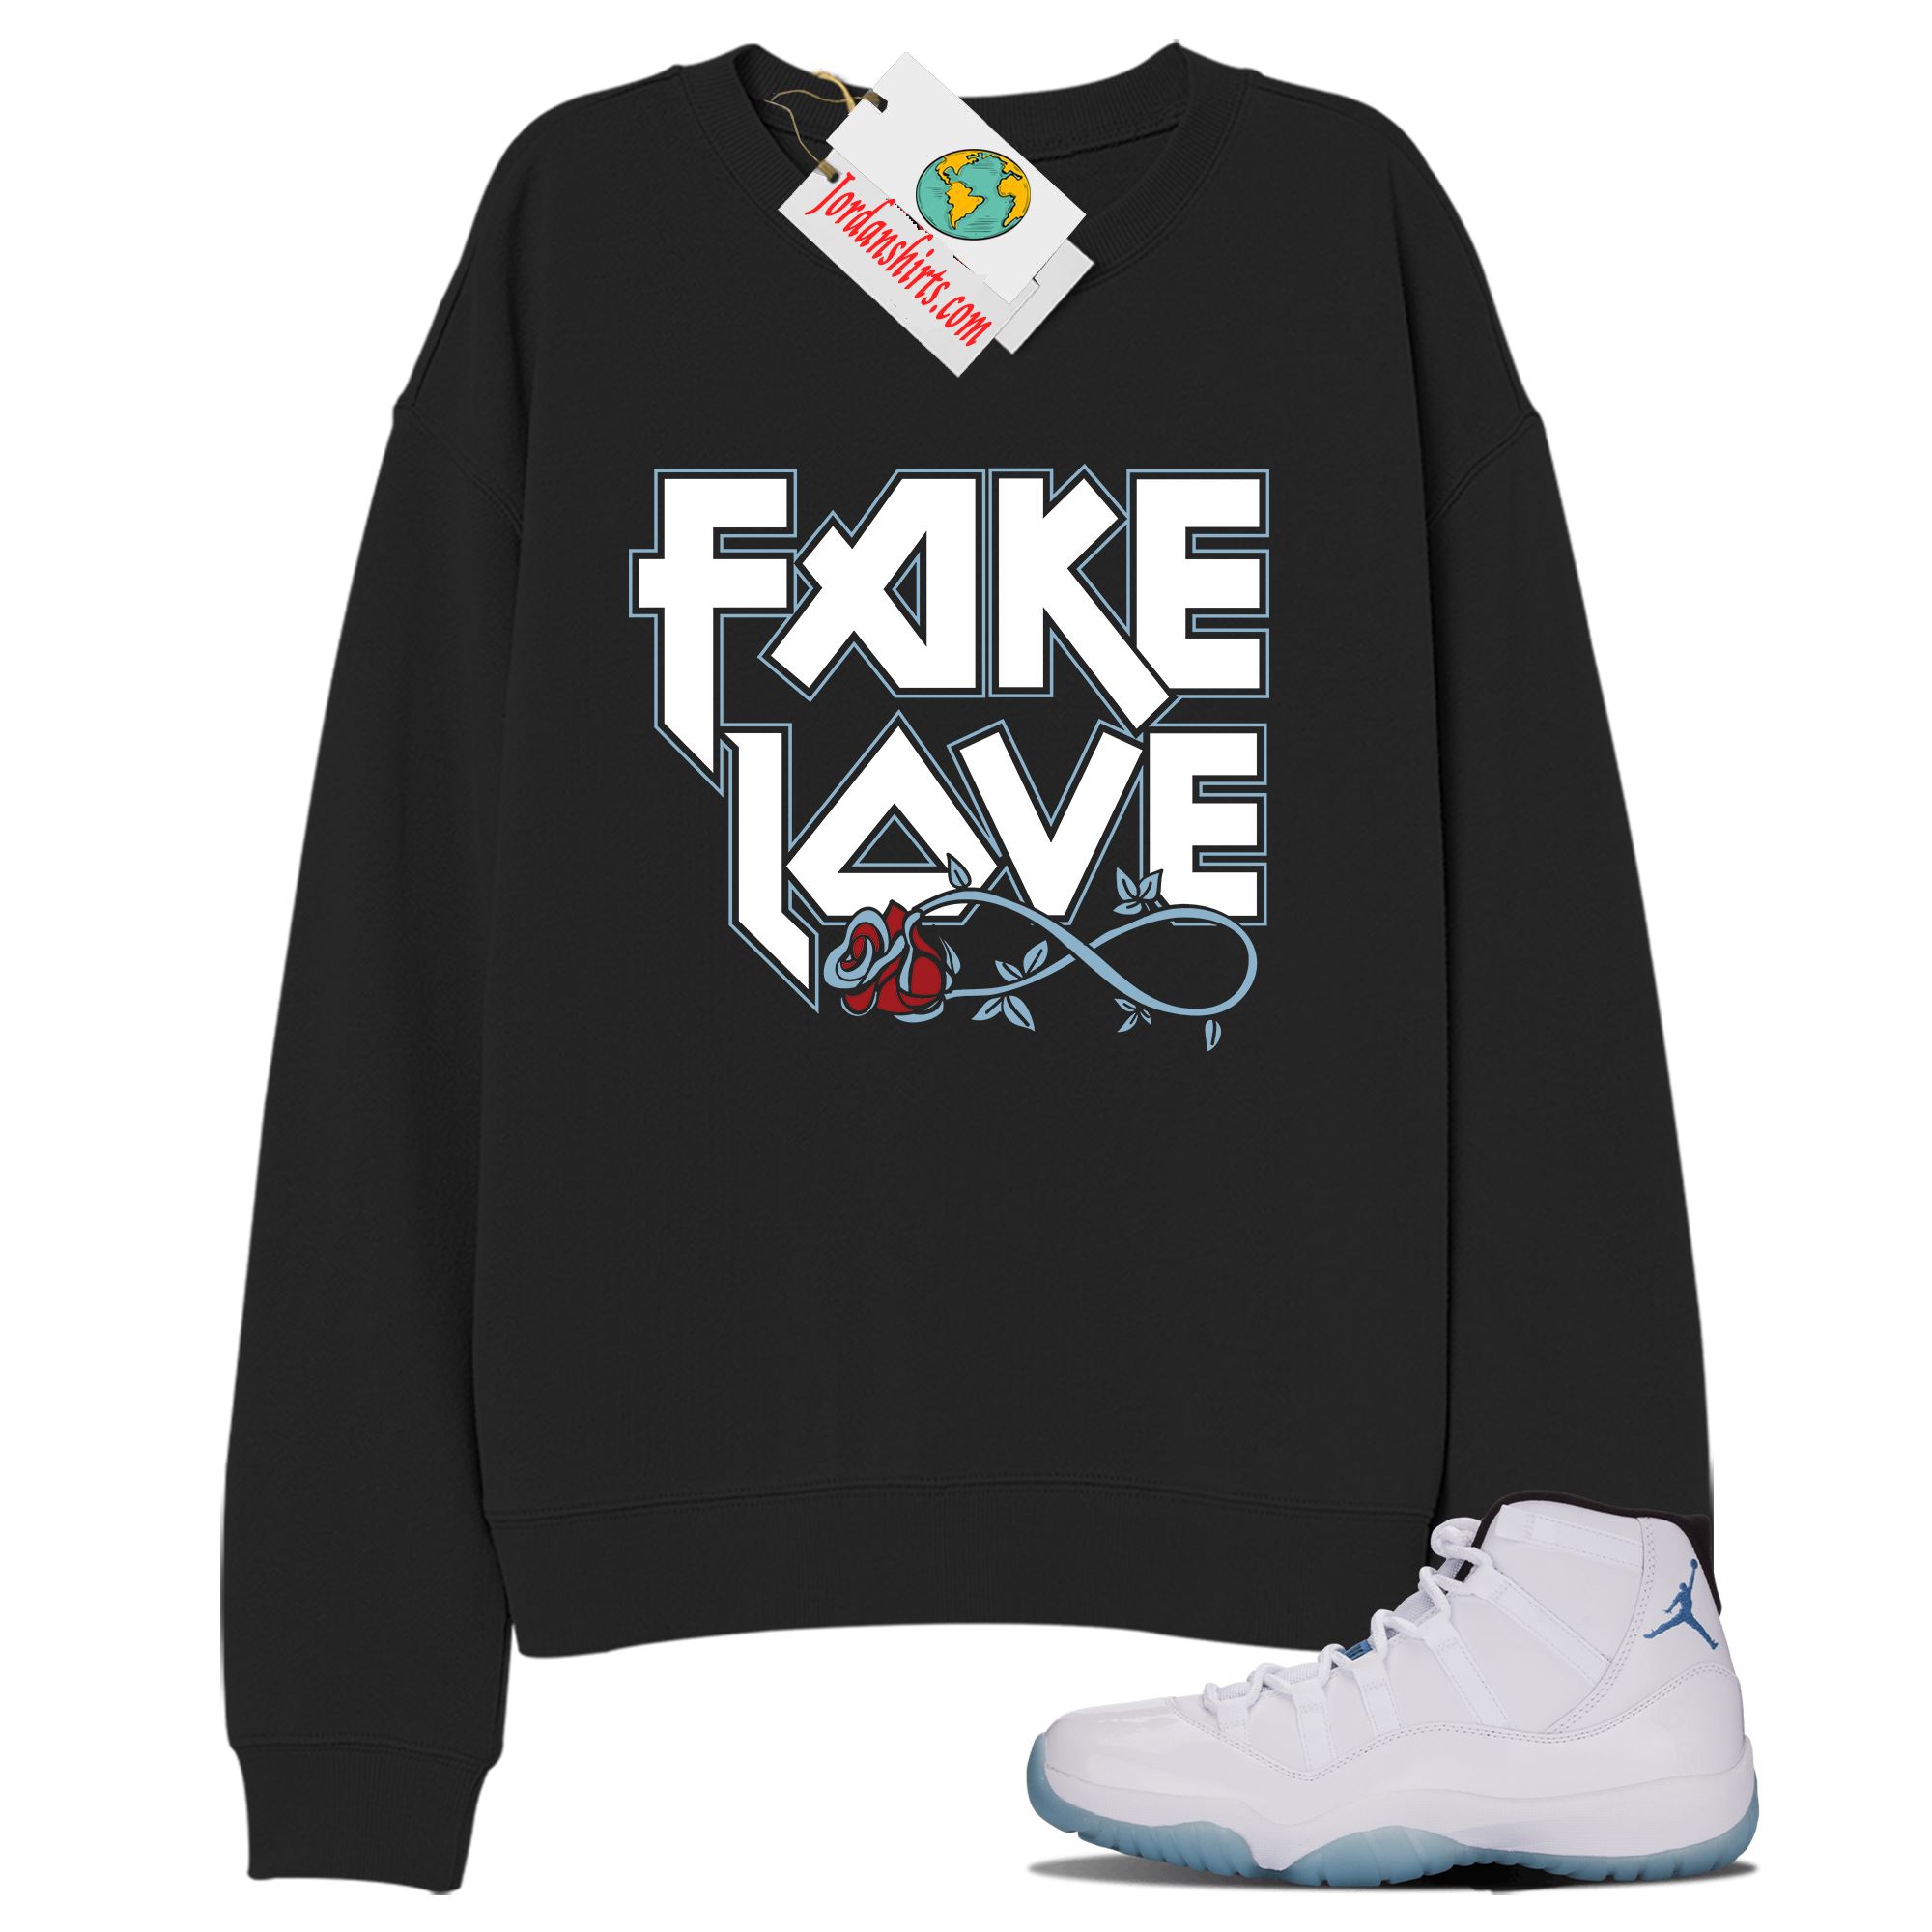 Jordan 11 Sweatshirt, Fake Love Infinity Rose Black Sweatshirt Air Jordan 11 Legend Blue 11s Plus Size Up To 5xl